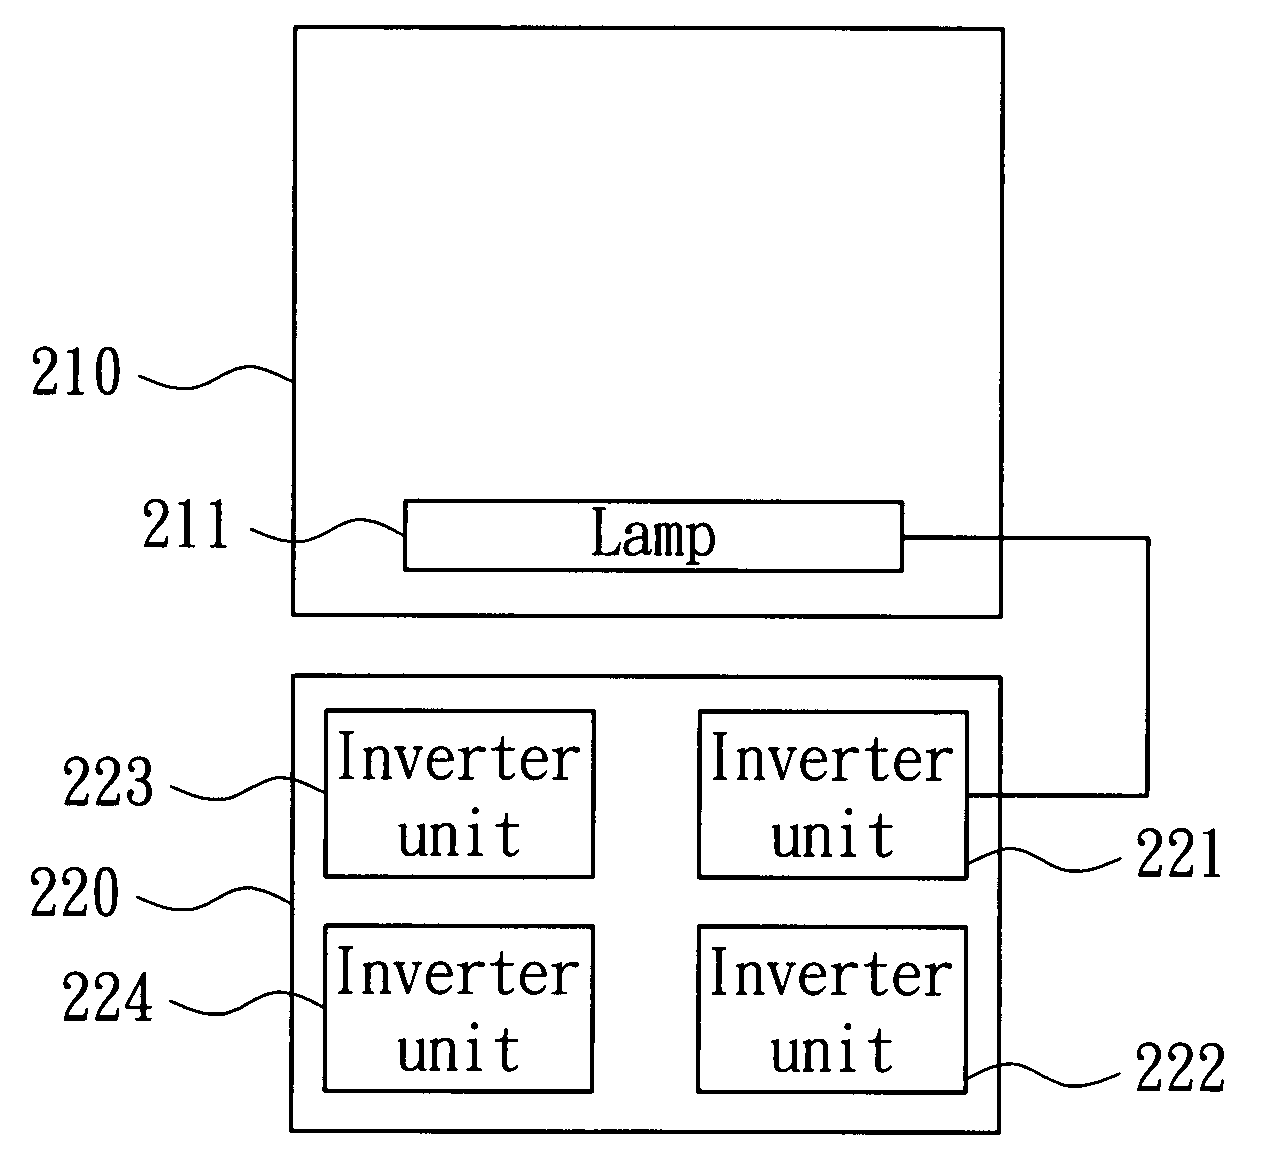 Inverter and invert unit